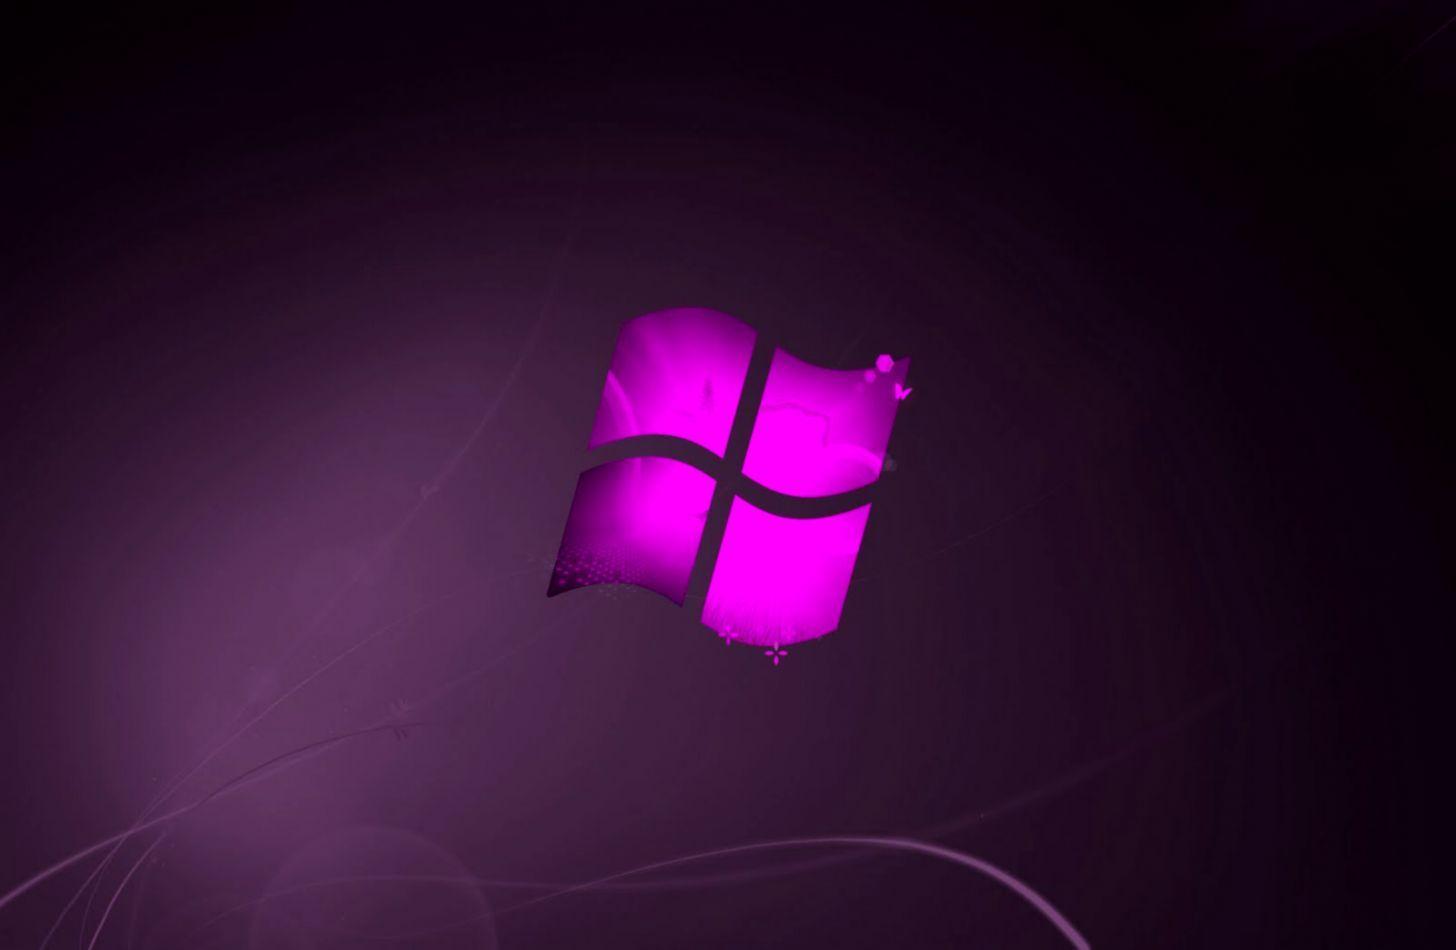 Purple Windows 7 Wallpaper Background. Best Image Background